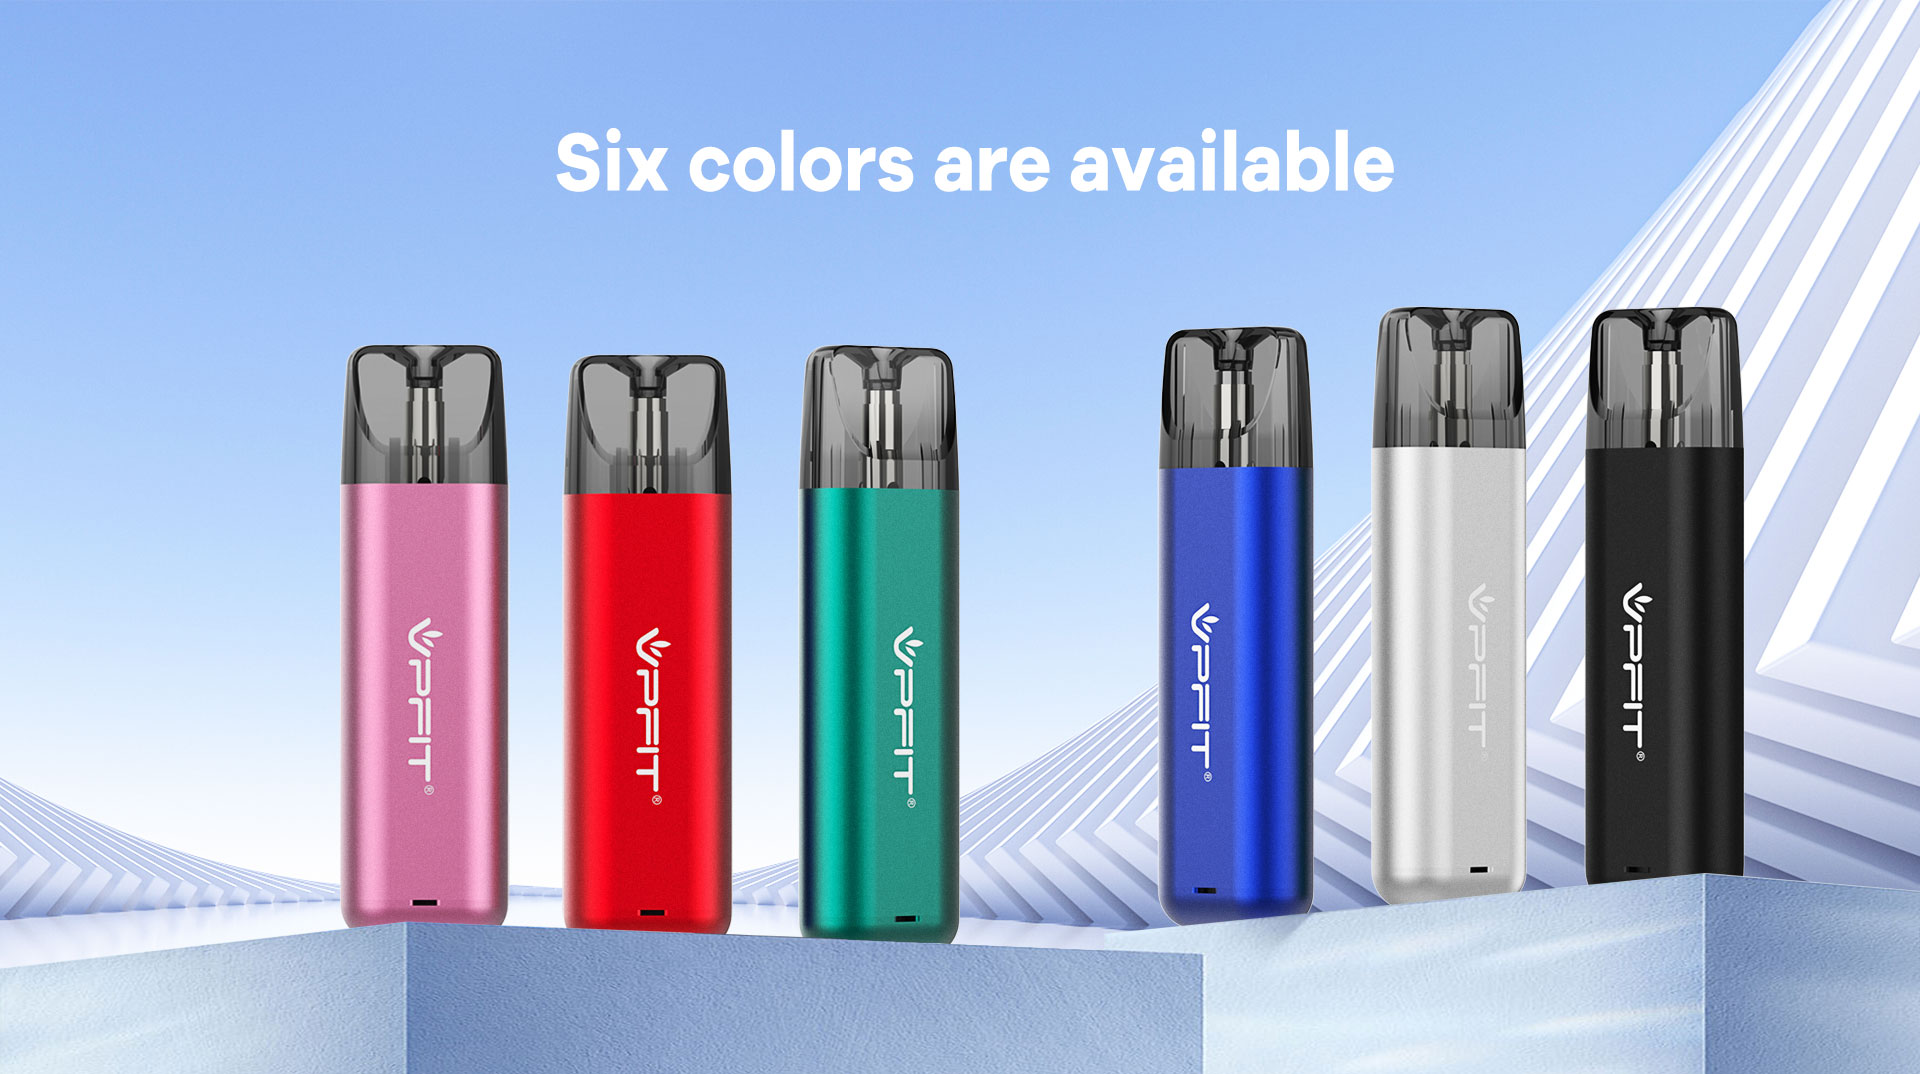 VPFIT Insbar-II prefilled pod rechargeable vape pen provide 6 color to choose